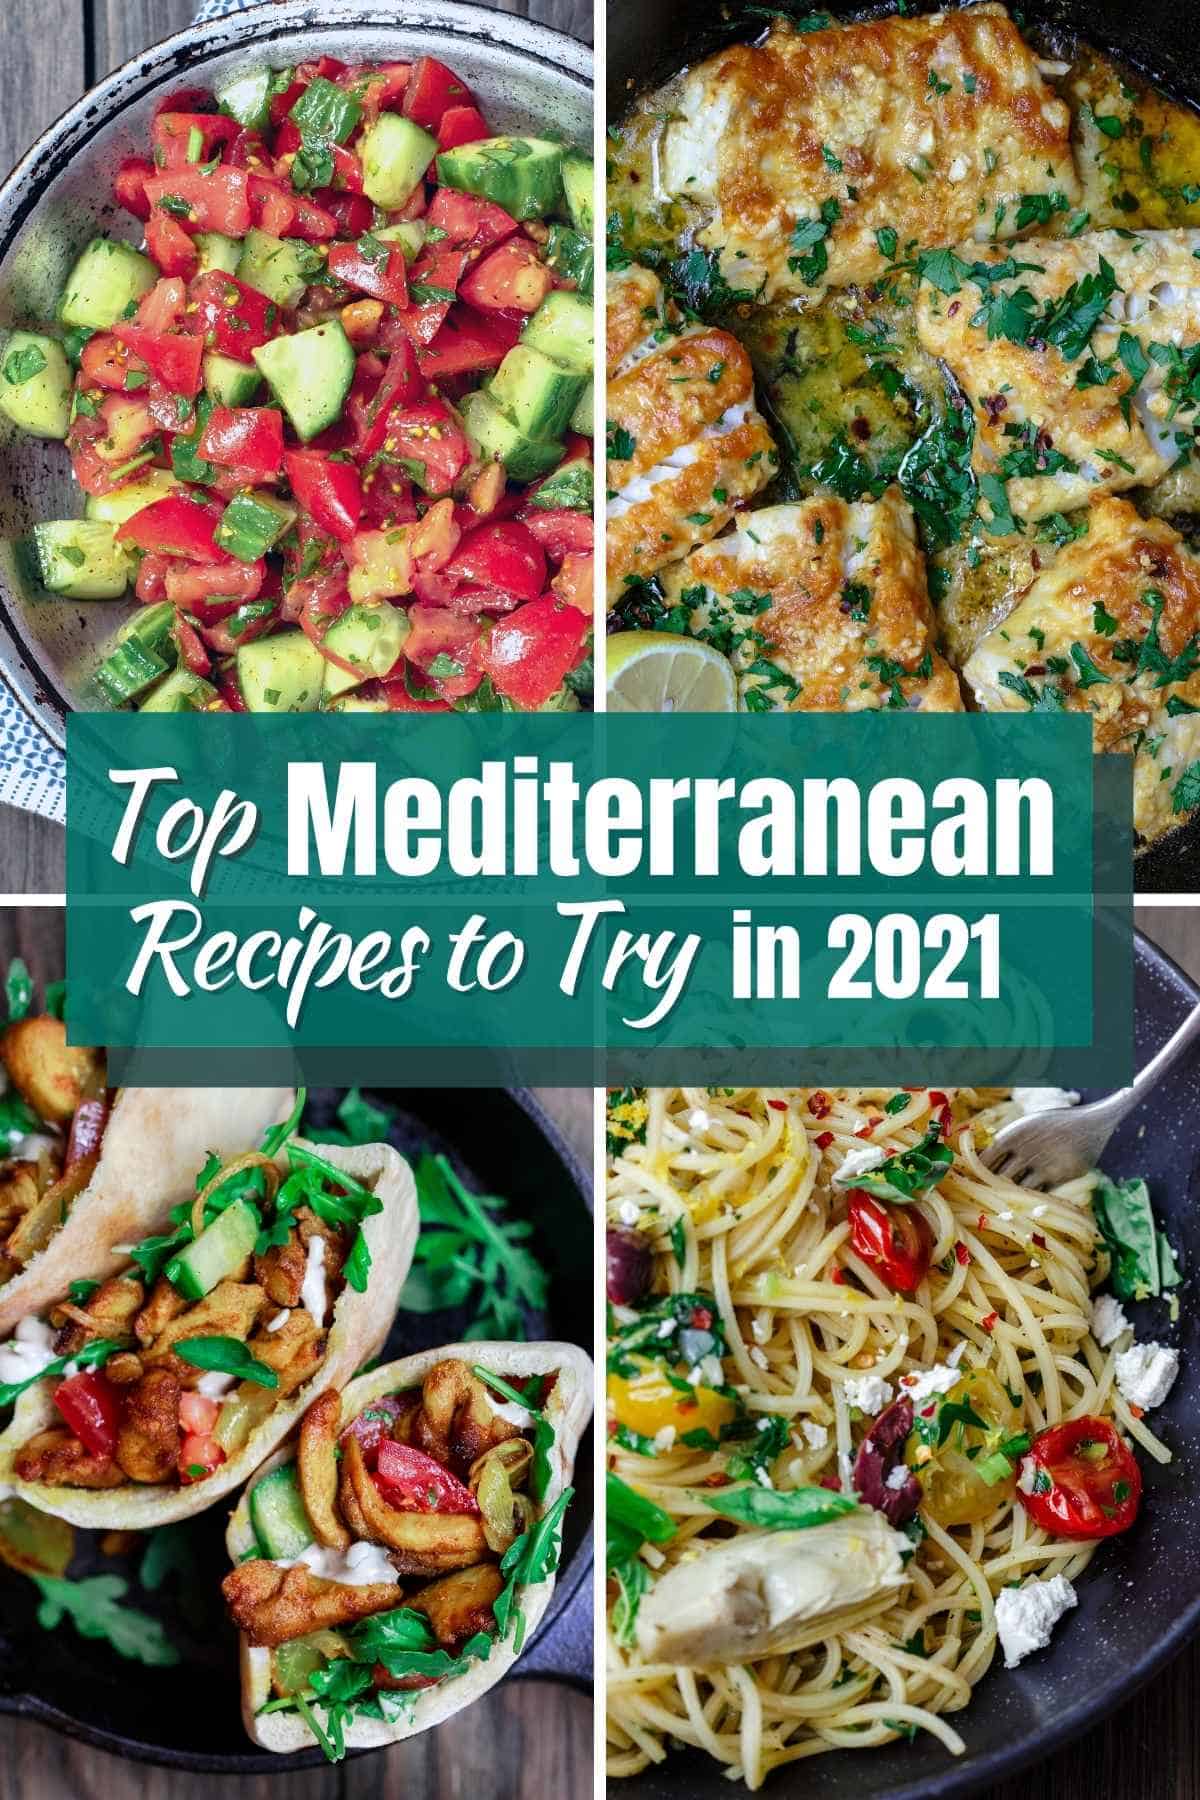 Mediterranean Recipes & Lifestyle | The Mediterranean Dish